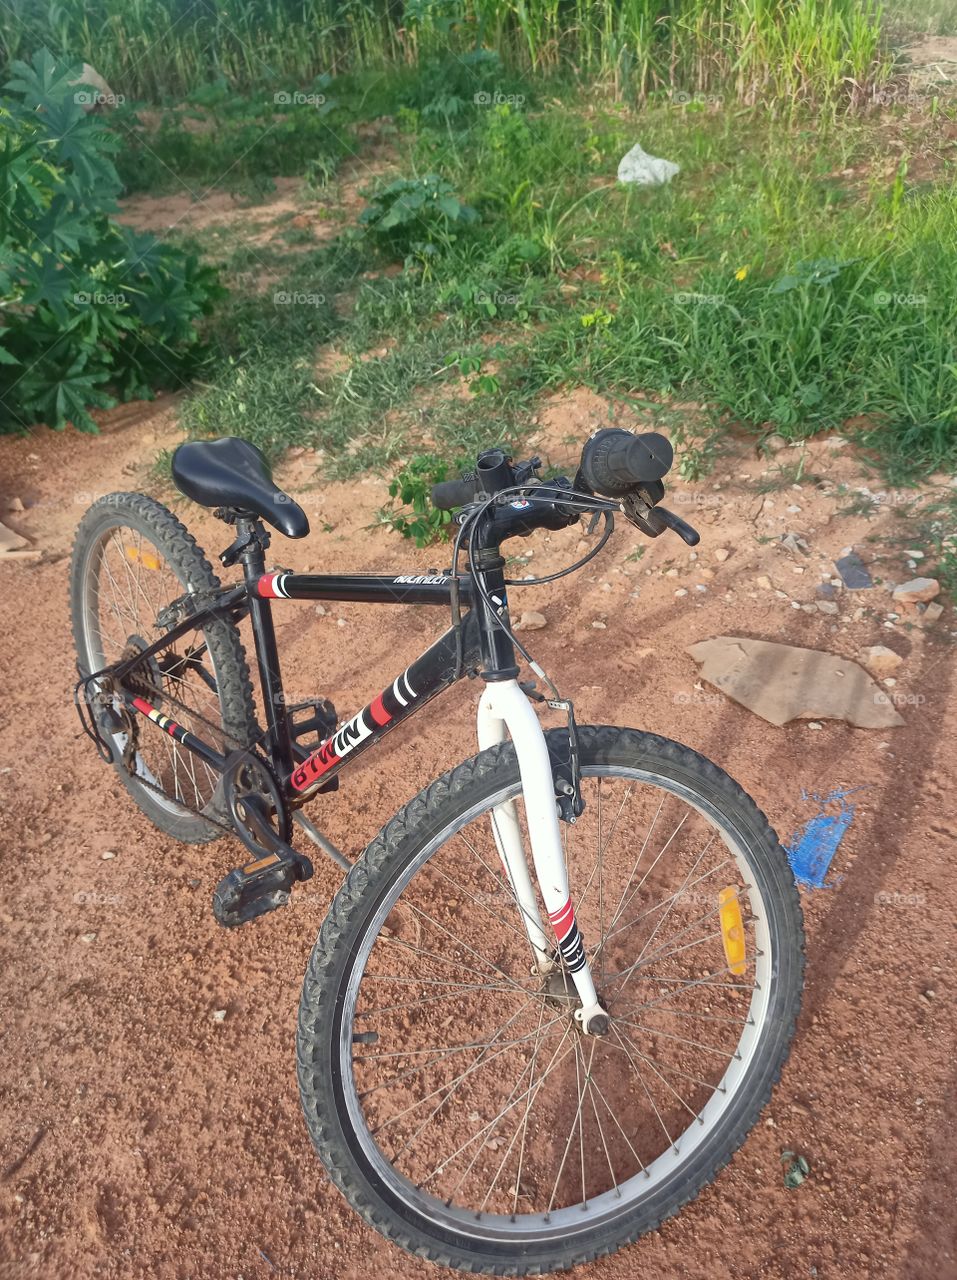 bicycle on the mud road 
rural scene